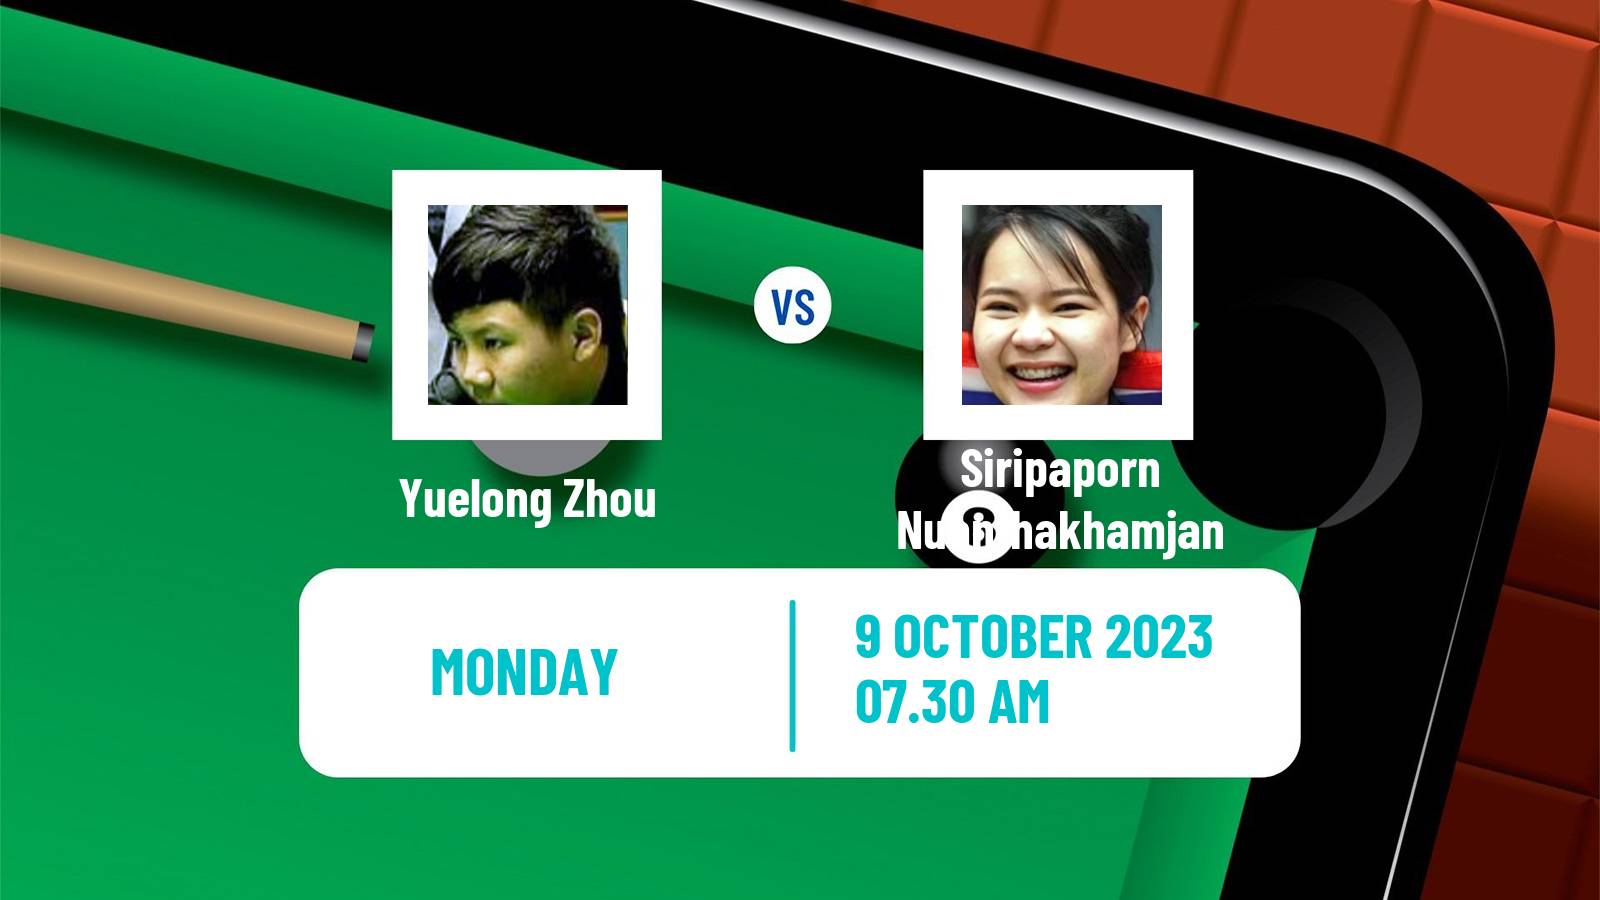 Snooker Wuhan Open Yuelong Zhou - Siripaporn Nuanthakhamjan